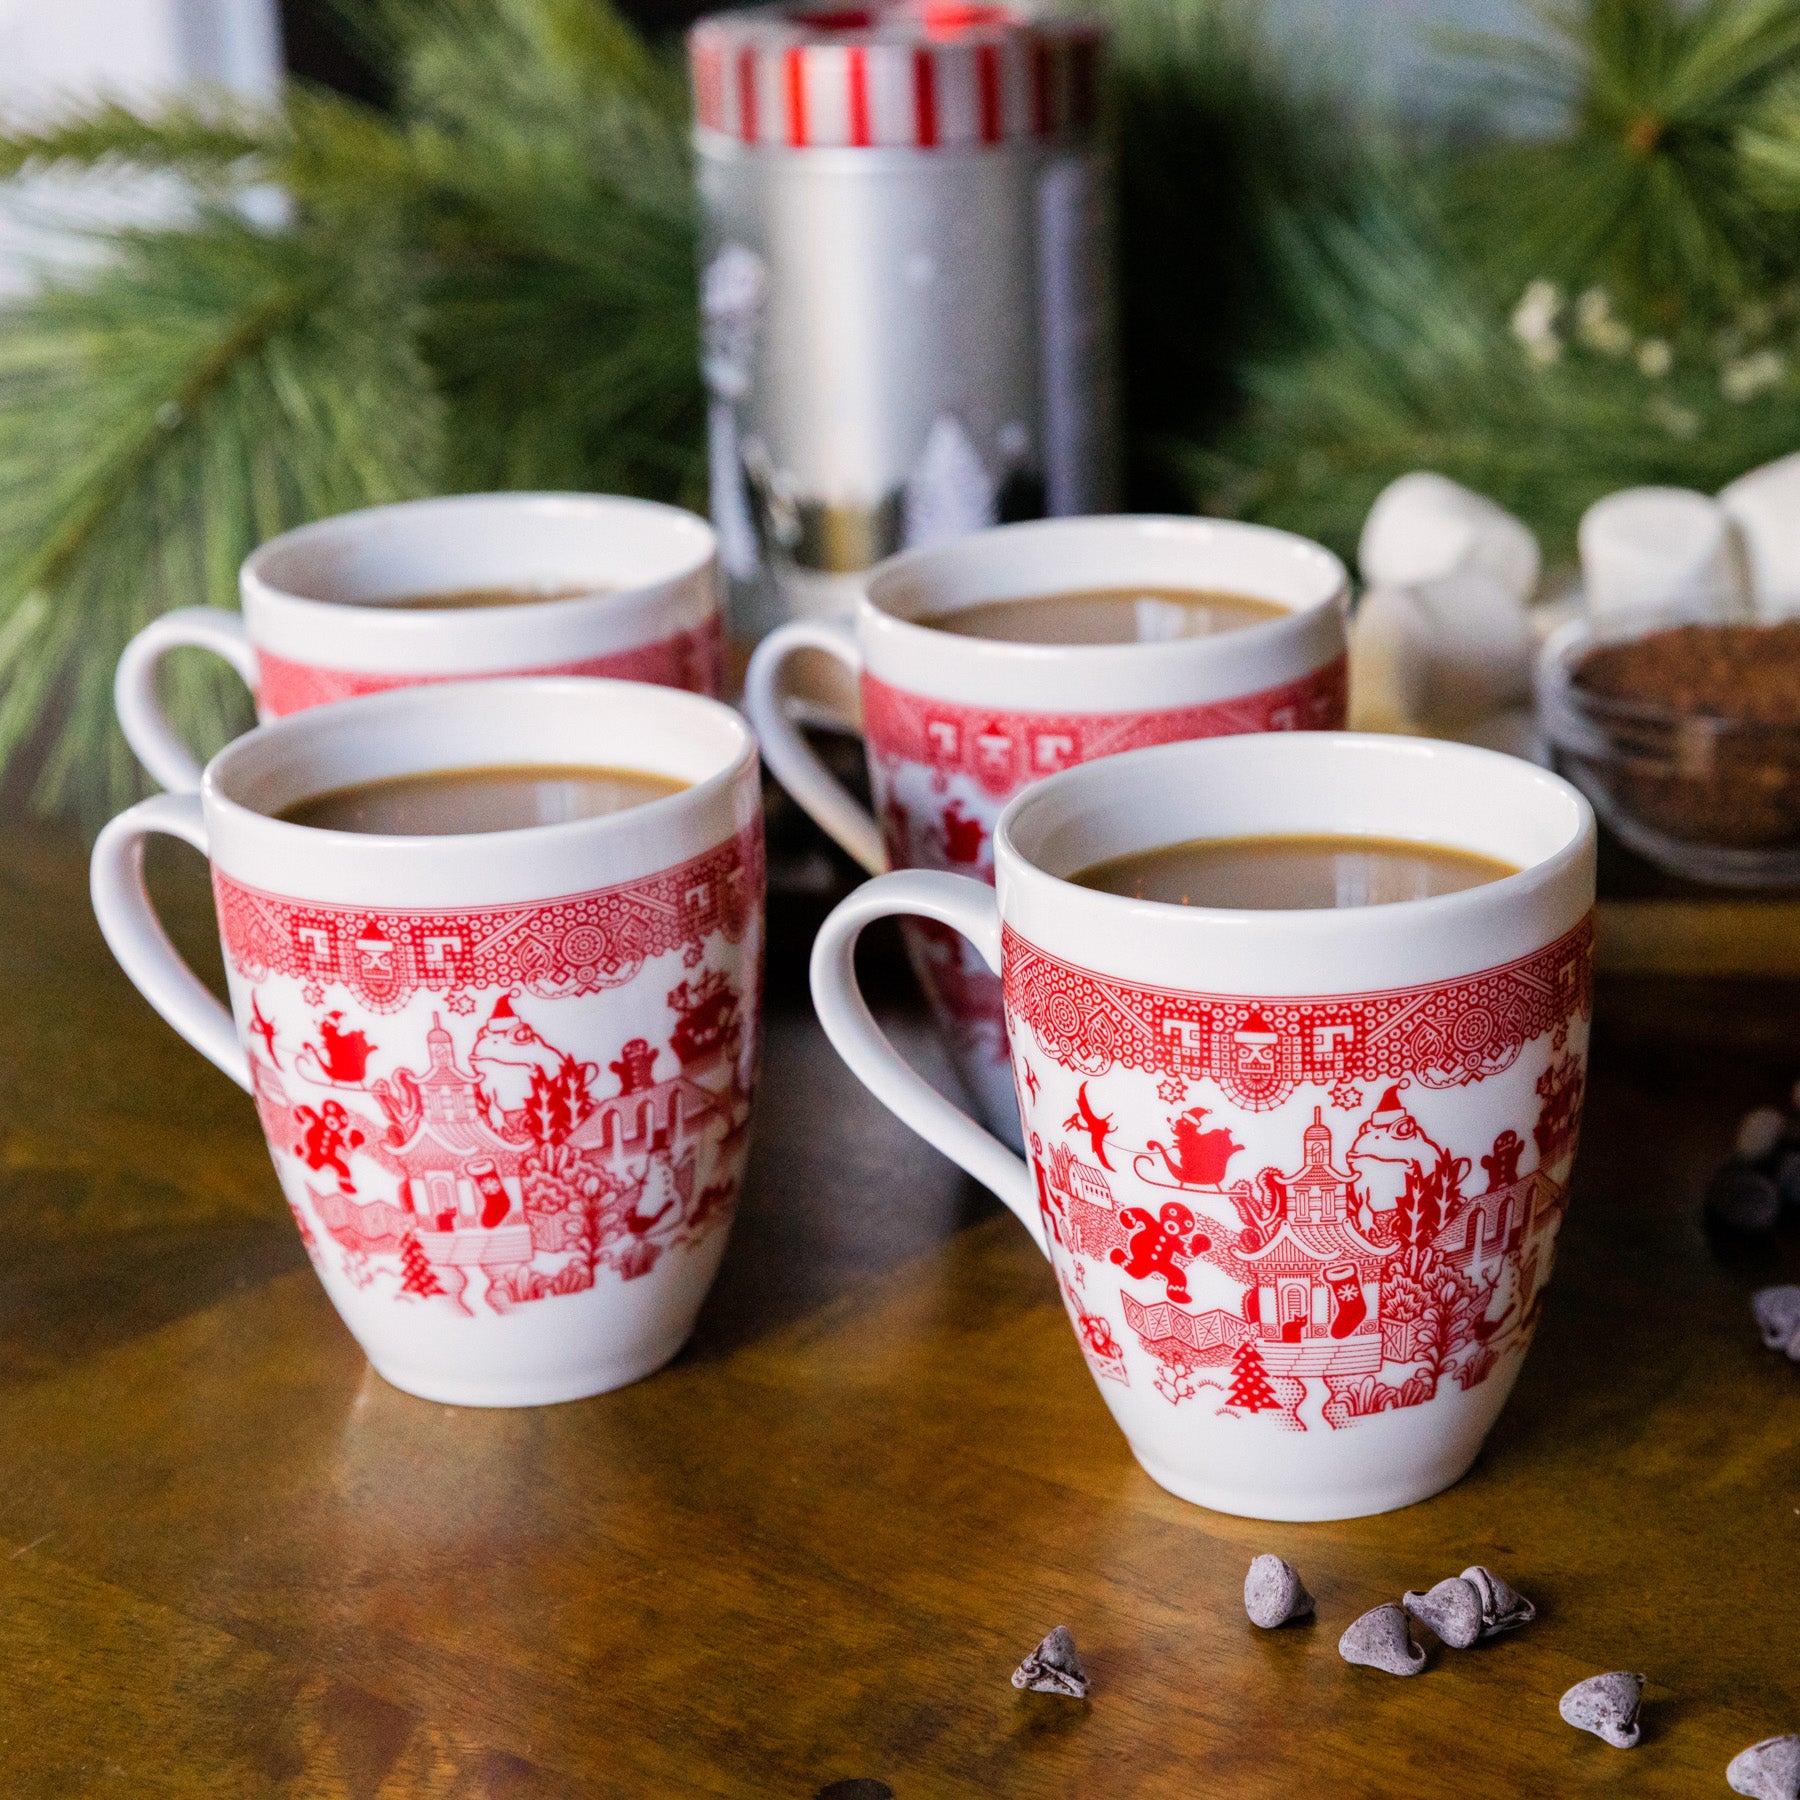 Xmas Coffee Mug Water Cup White Double-sided Christmas Tree Print